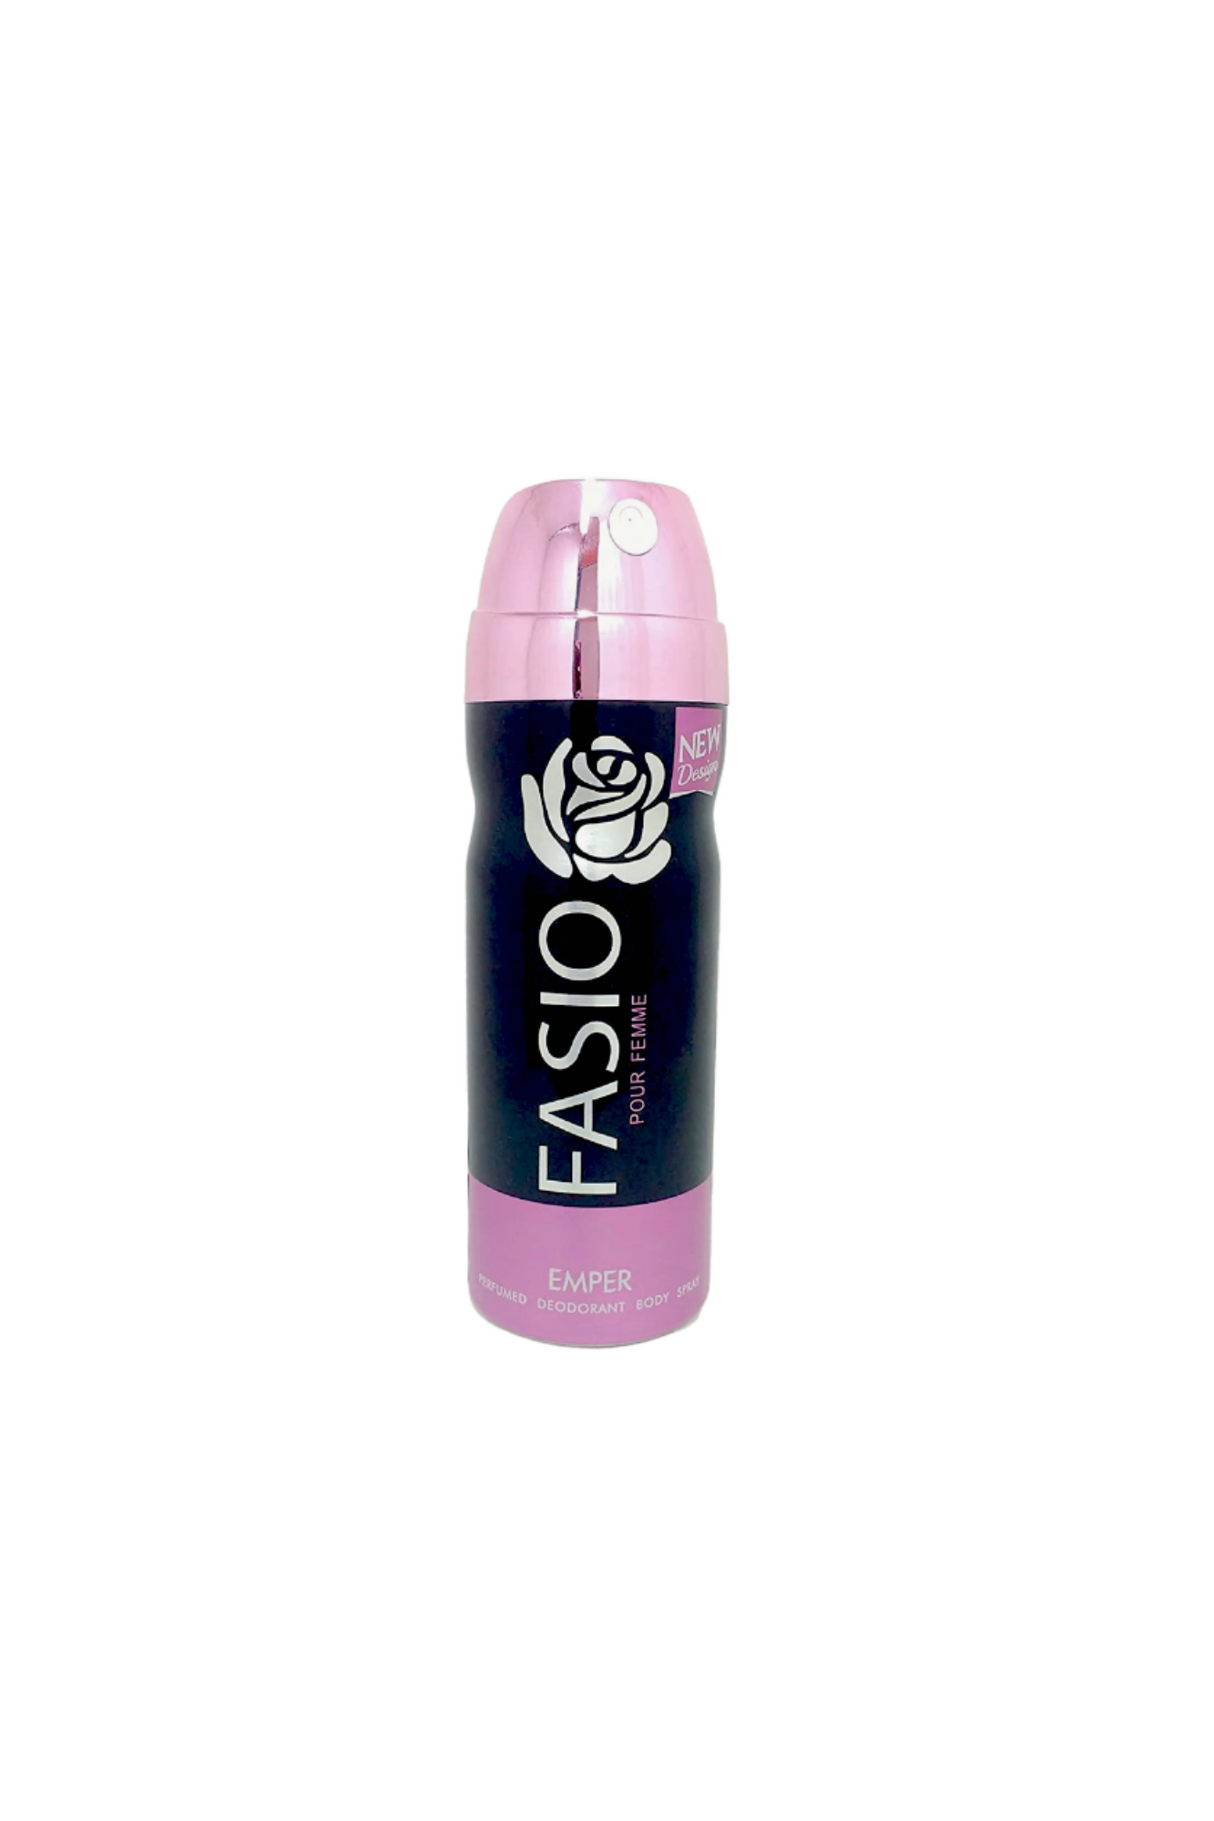 emper fasio deodorant body spray 200ml for women